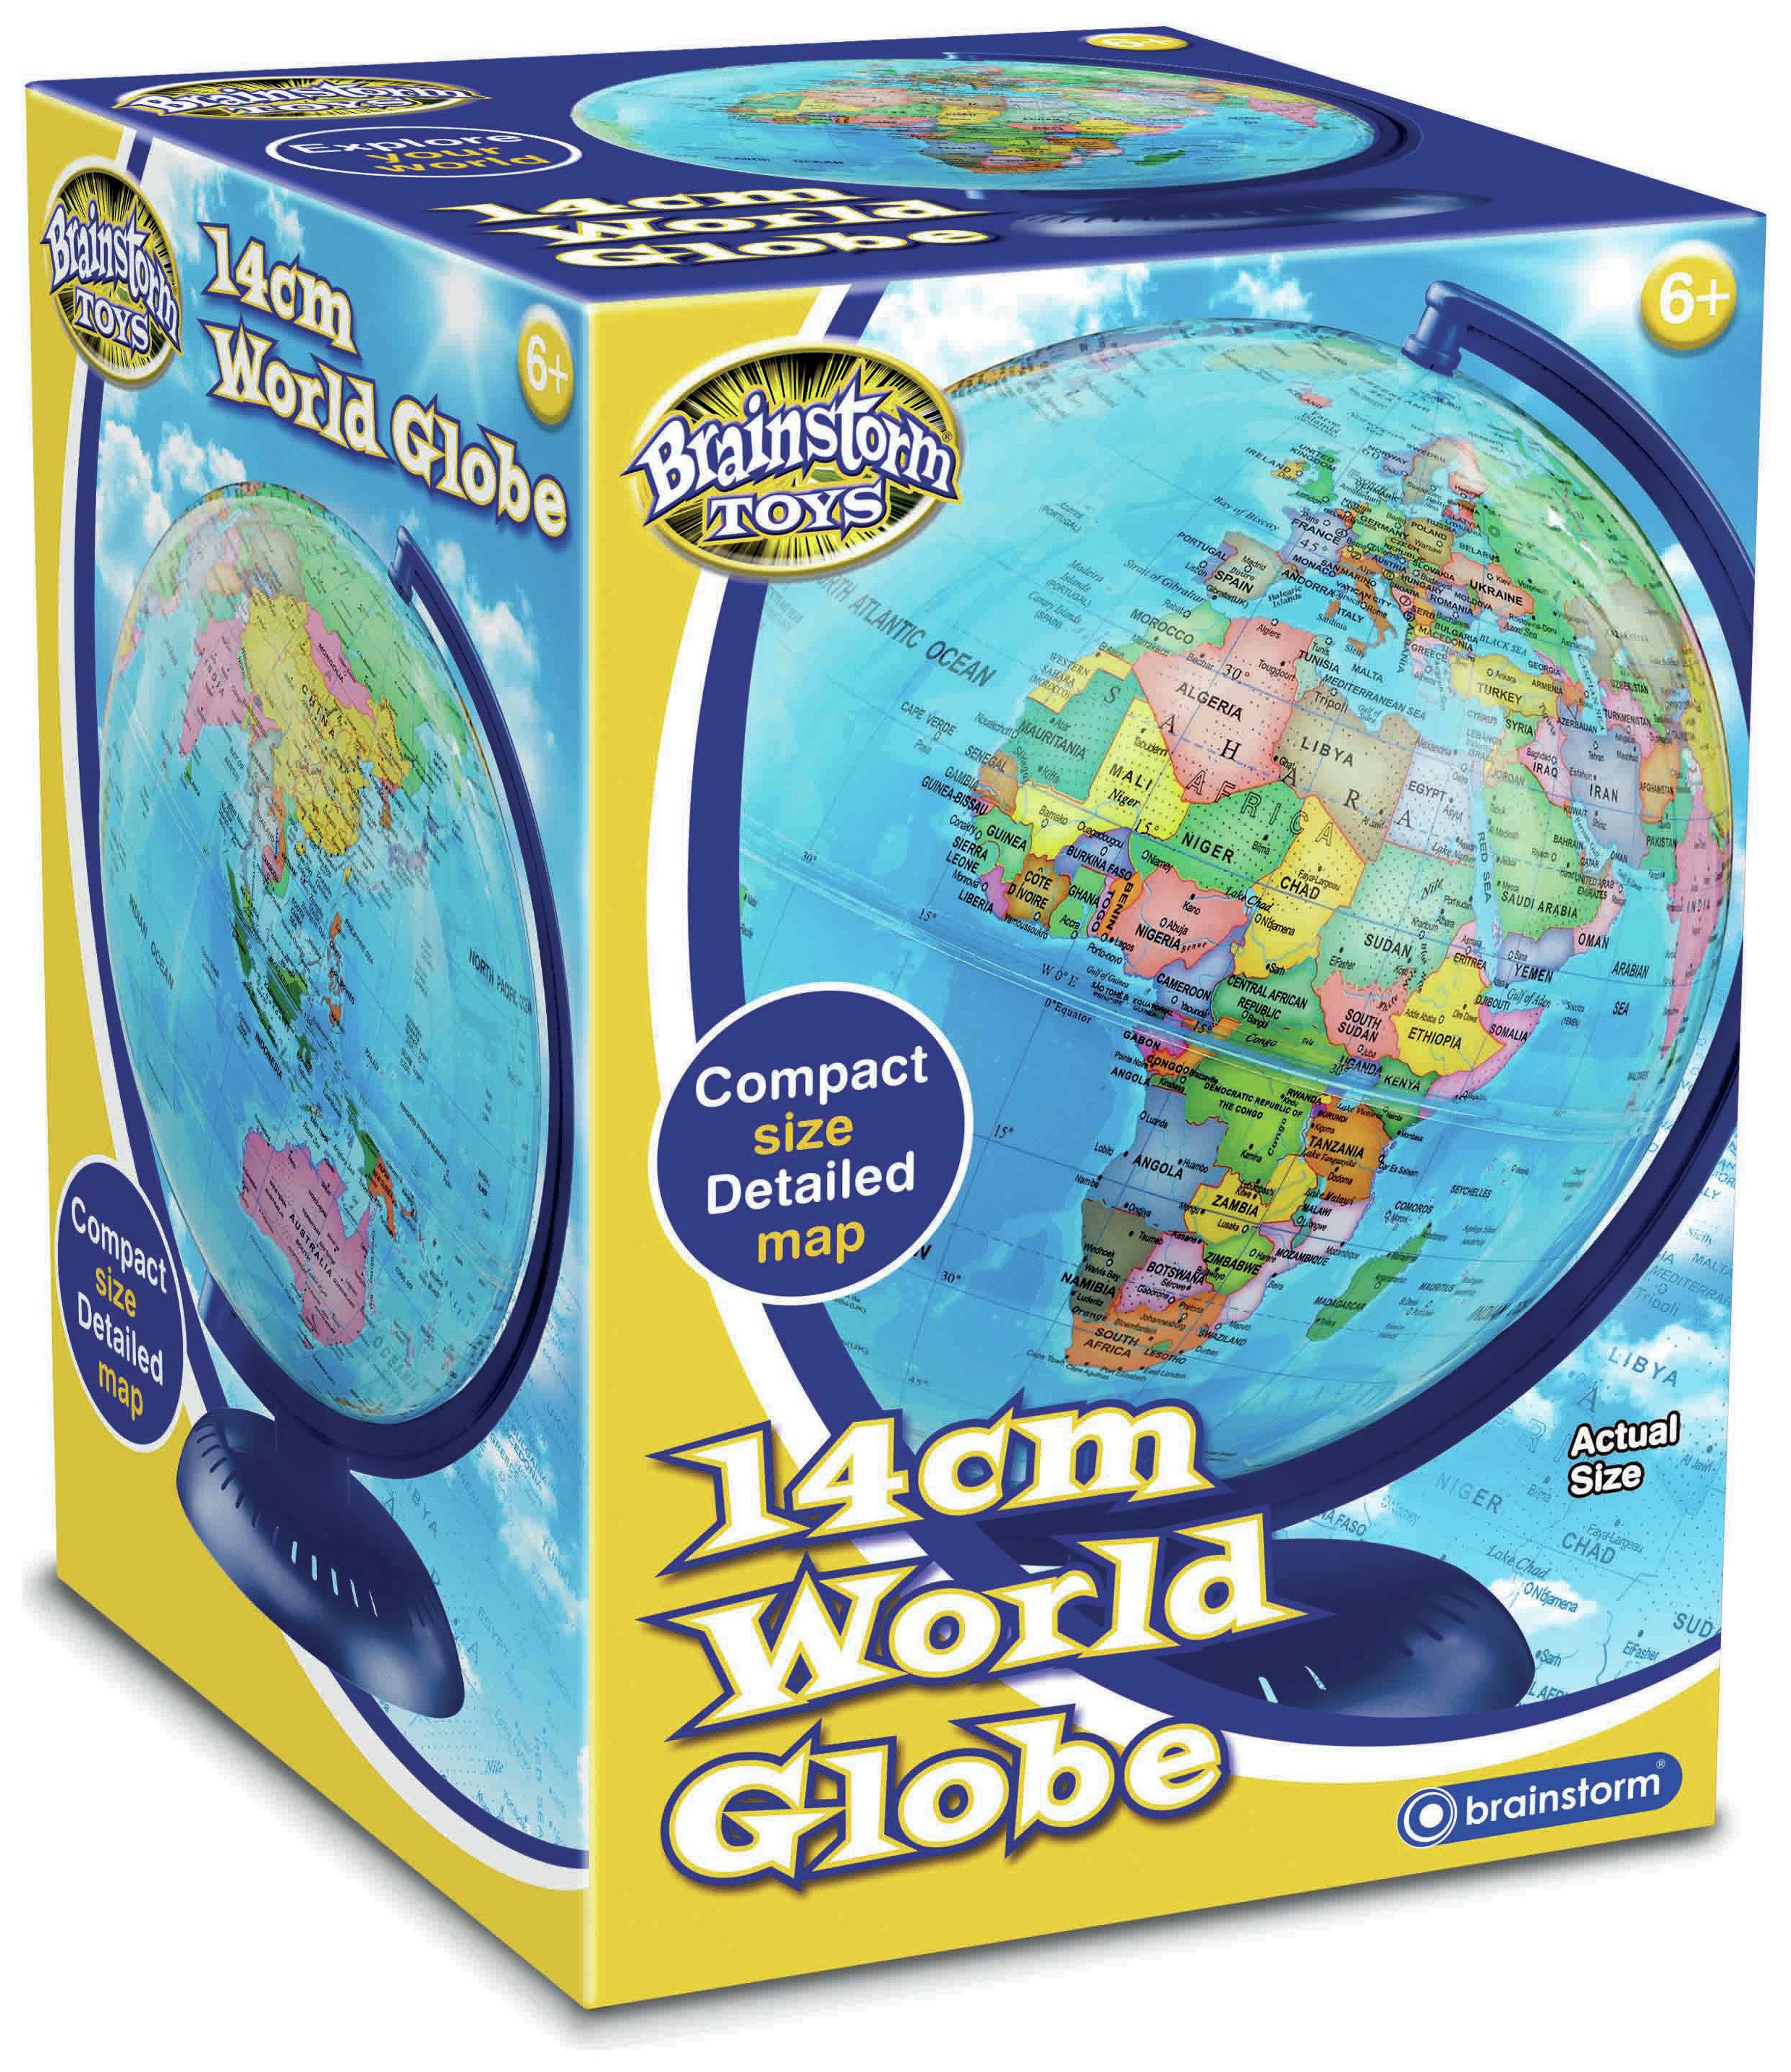 Brainstorm Toys World Globe - 14cm